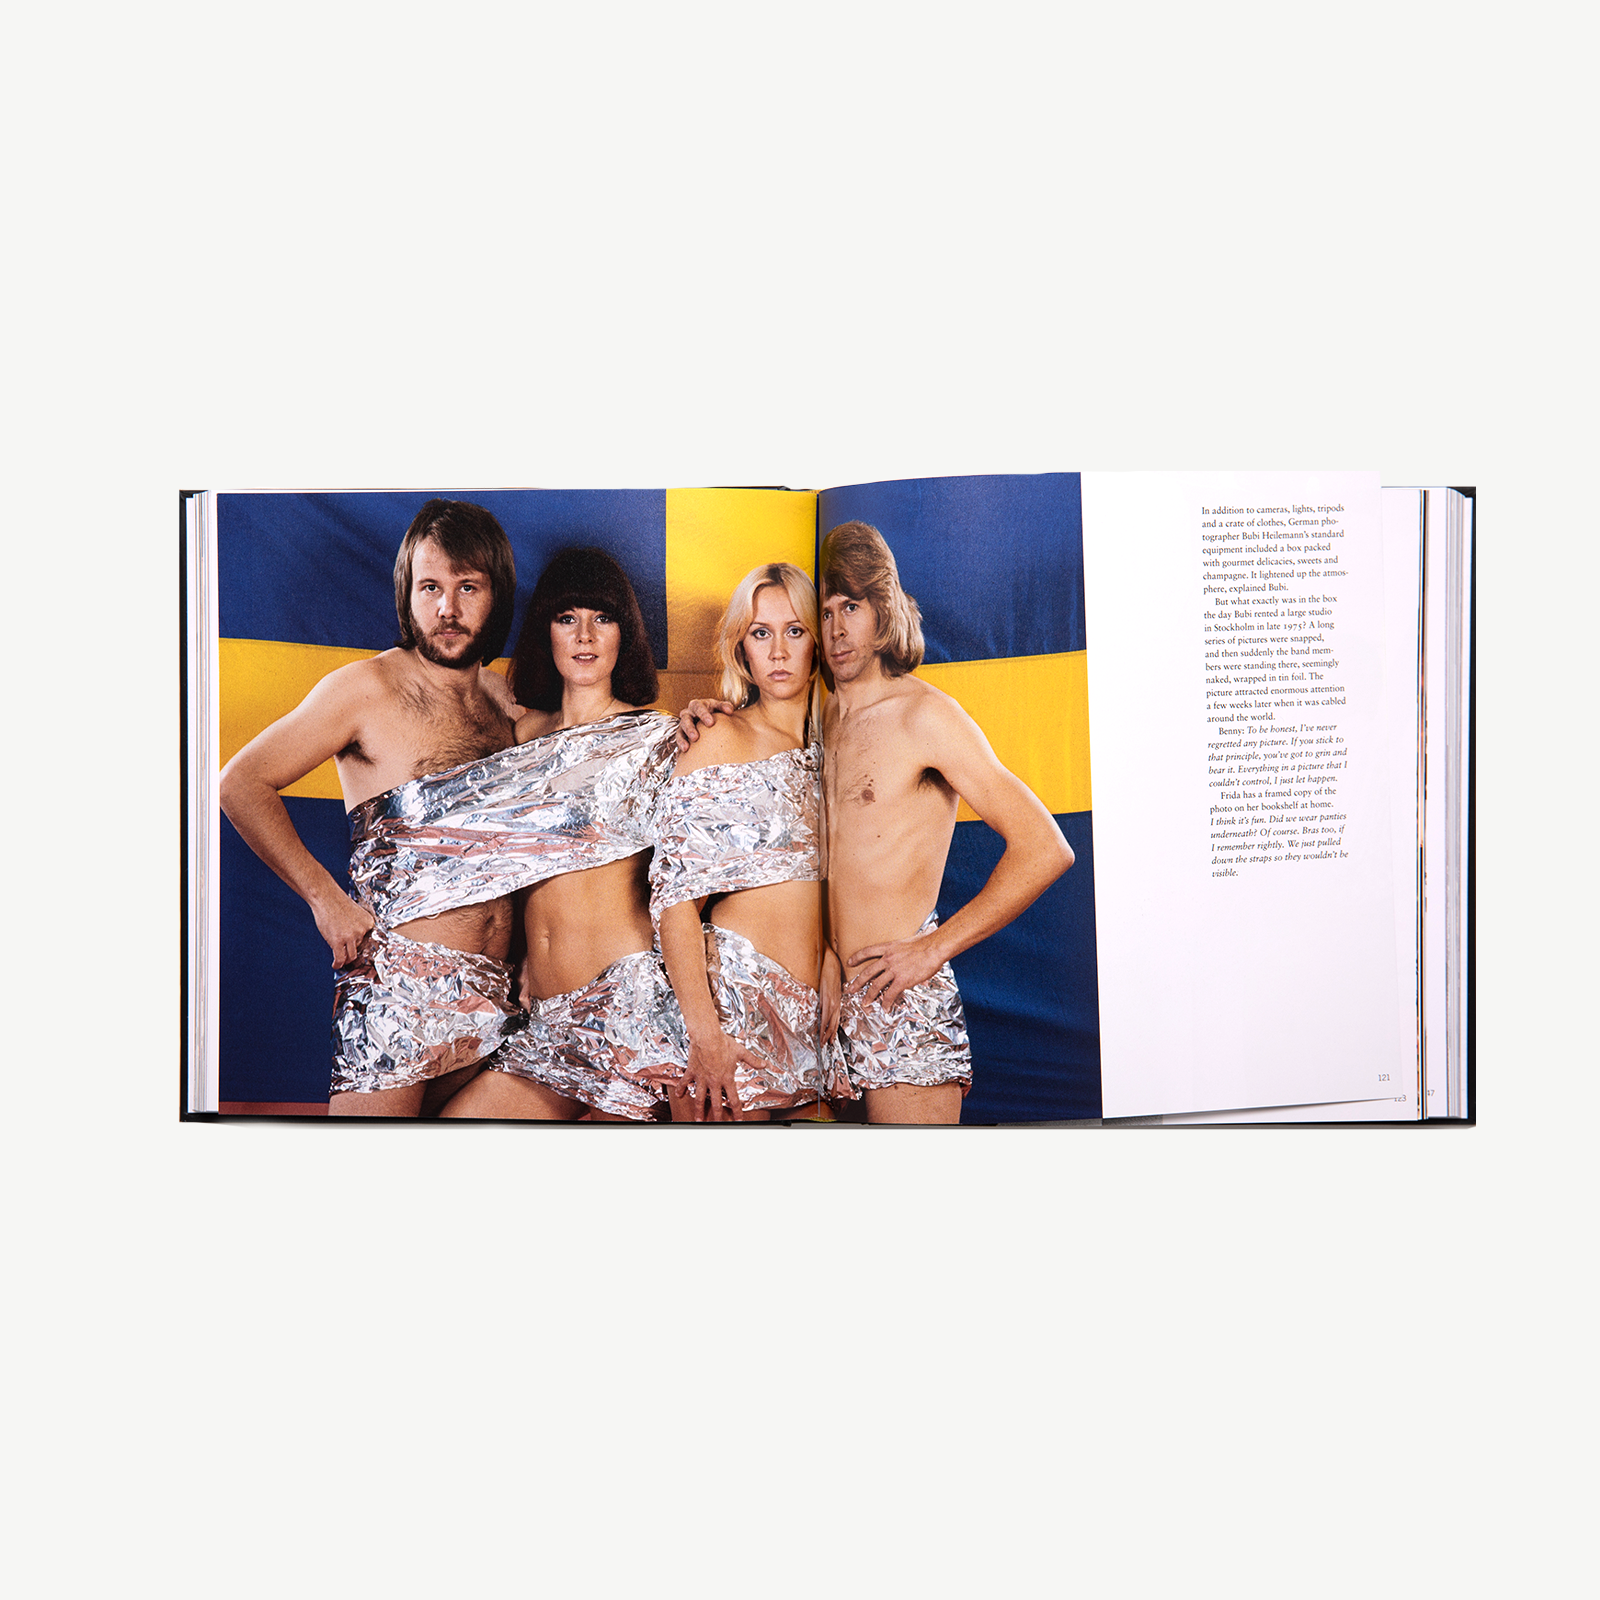 ABBA – The Official Photo Book (Compact)